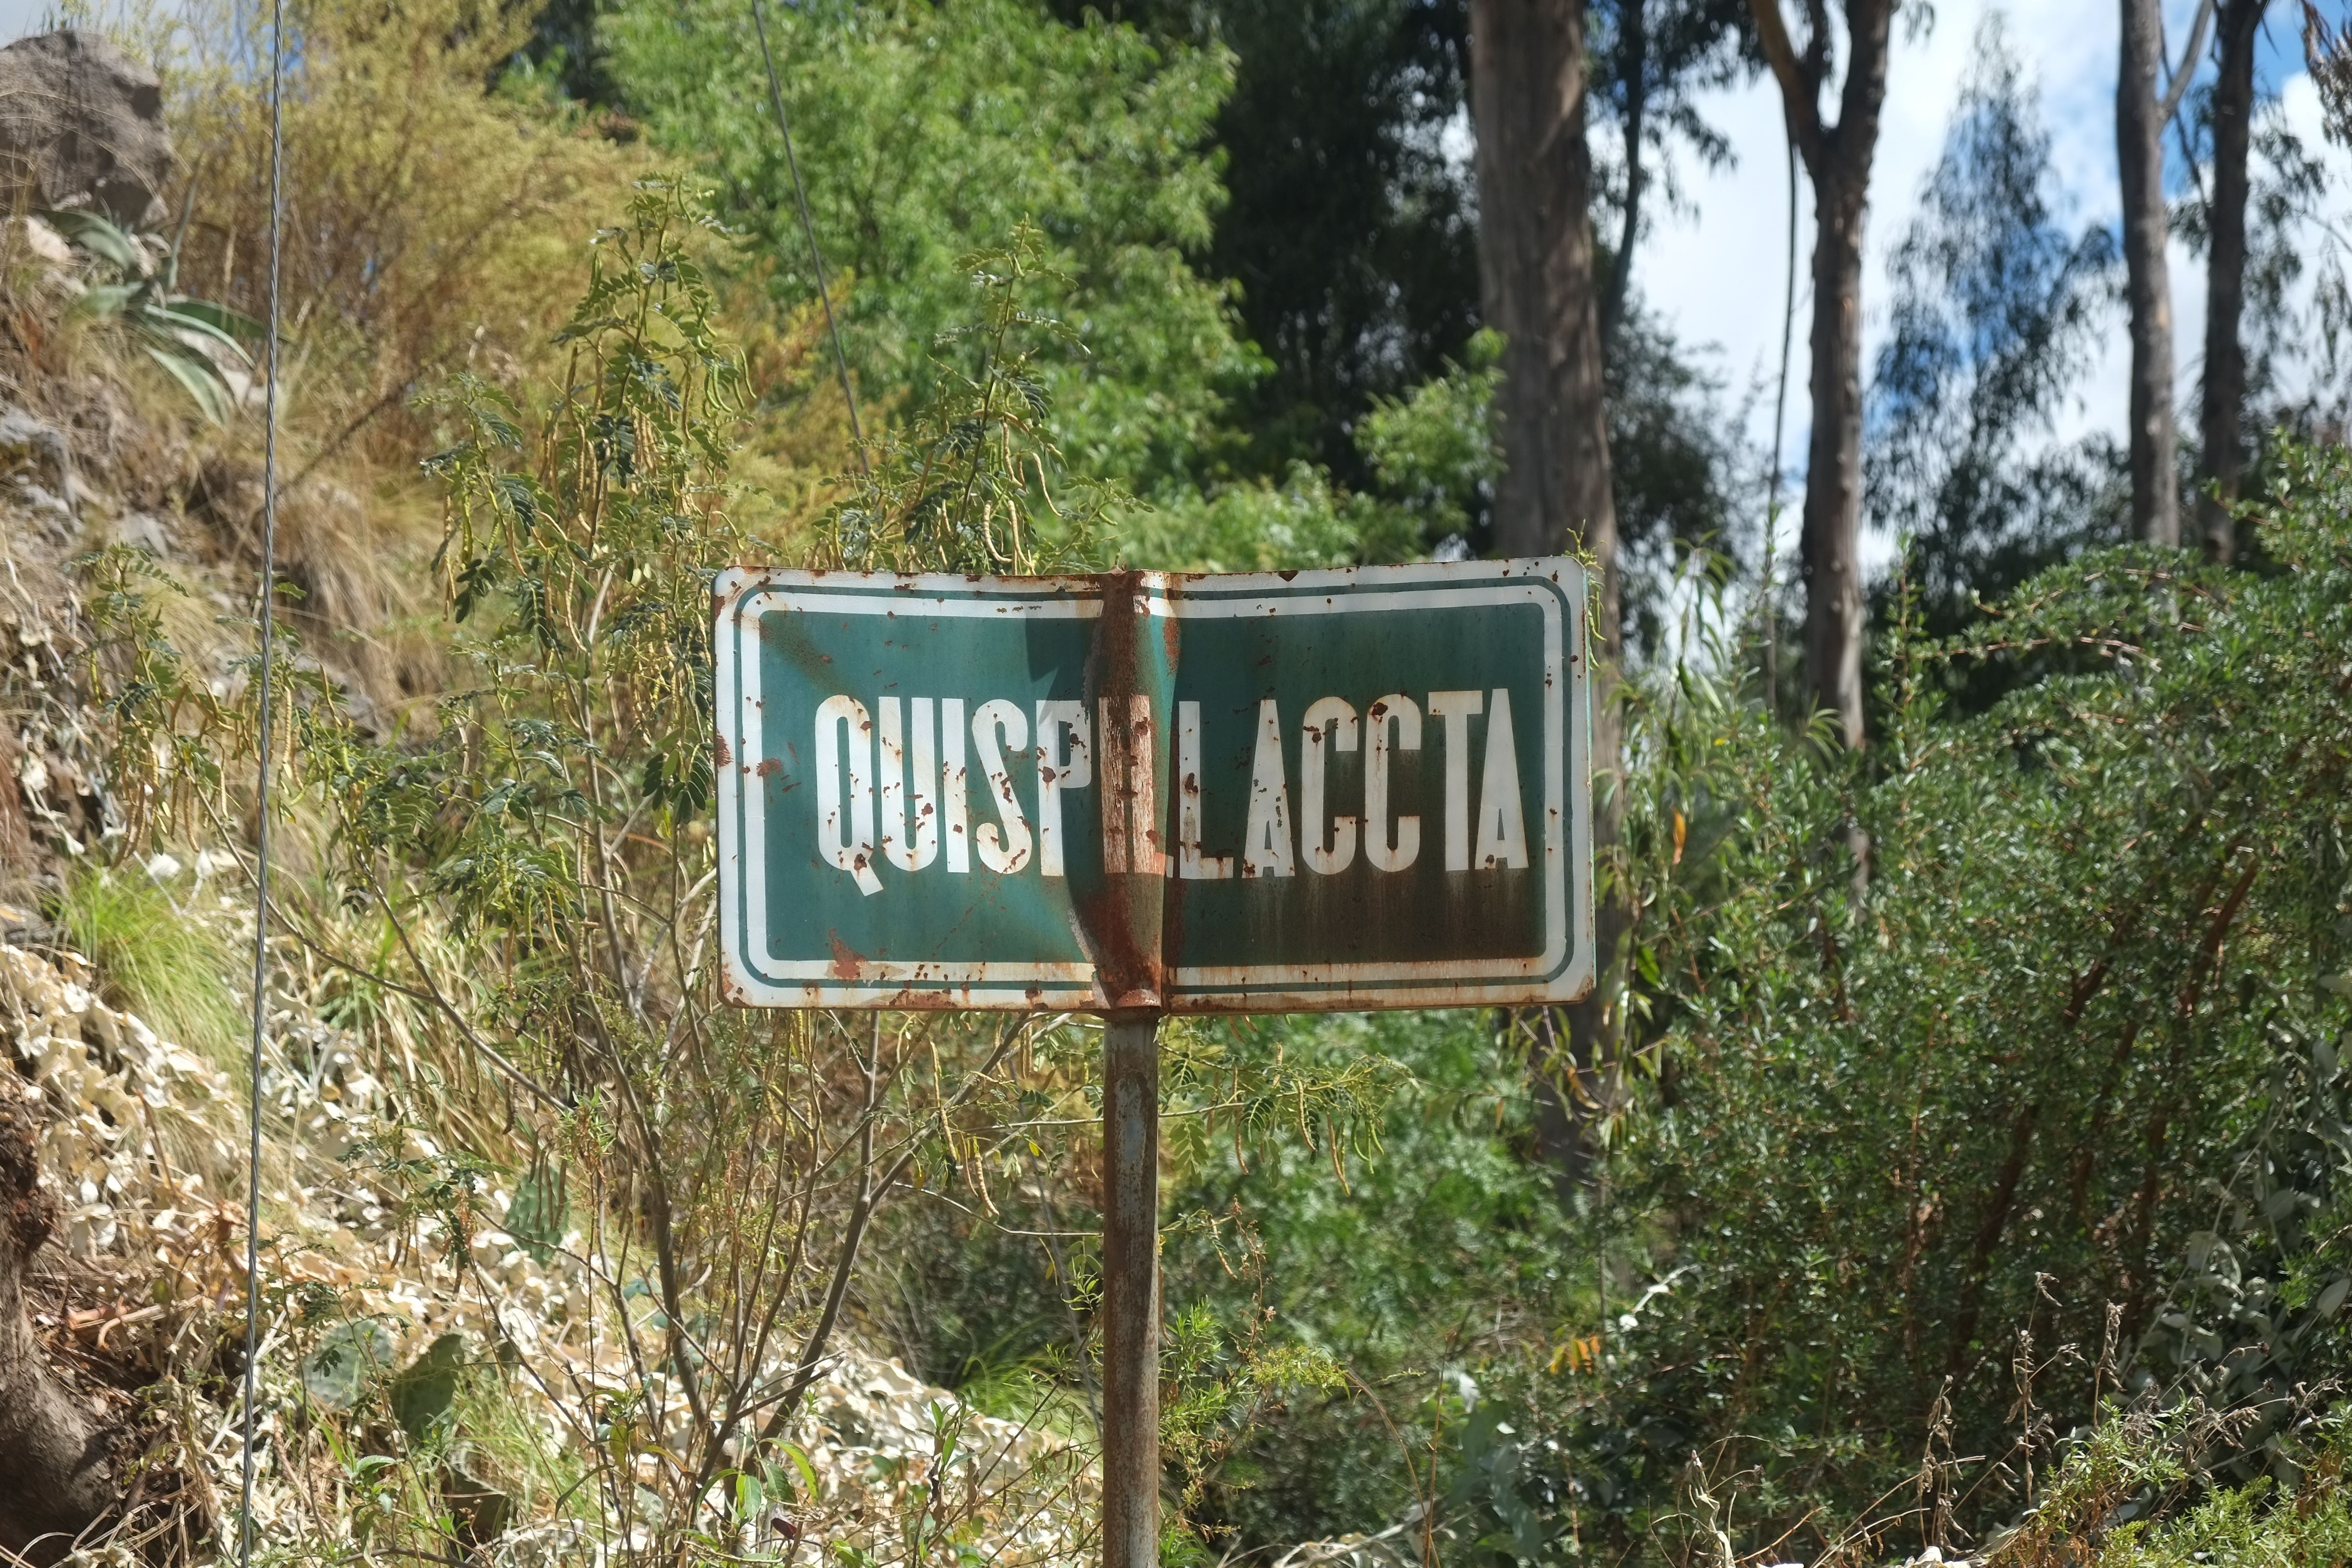 An old sign marking a road into Quispillaccta, Peru. Image by Dan Schwartz. Peru, 2019.